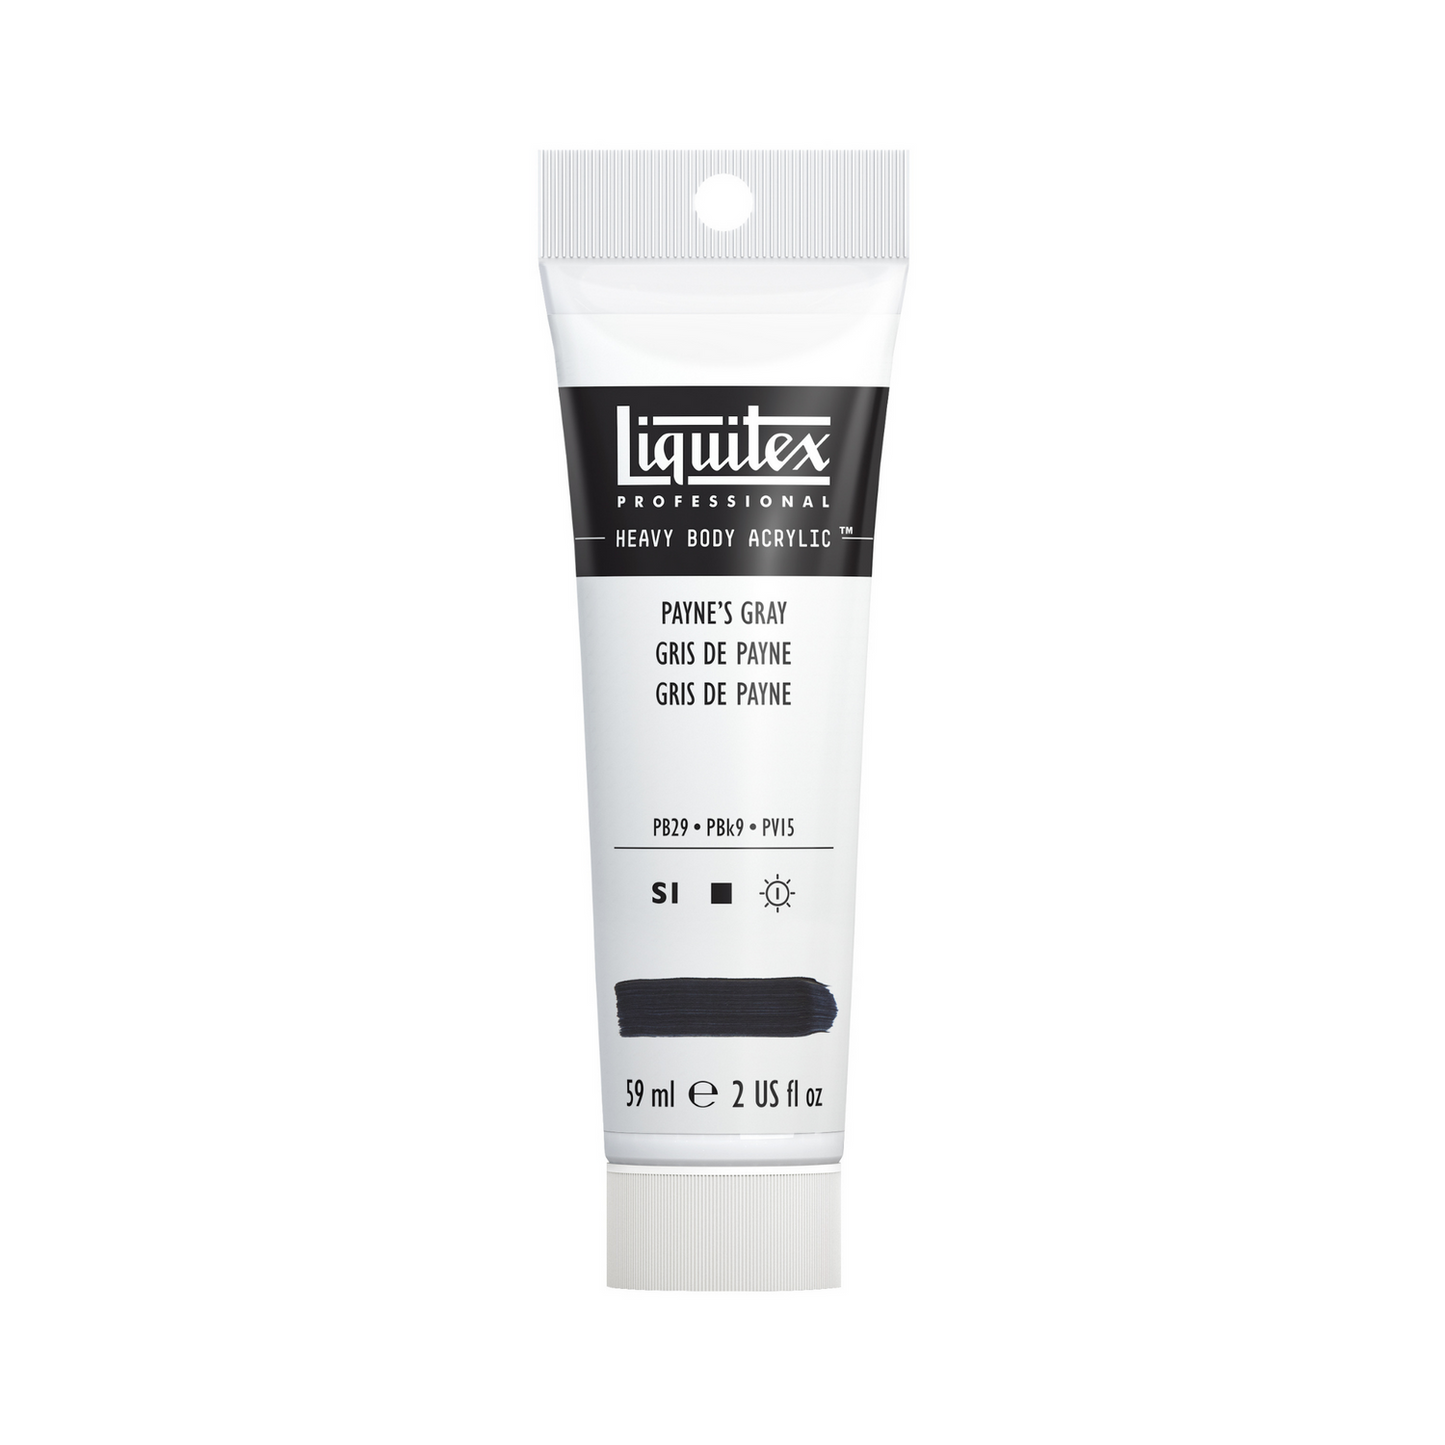 Liquitex Professional Heavy Body Acrylic 59ml - Paynes Grey